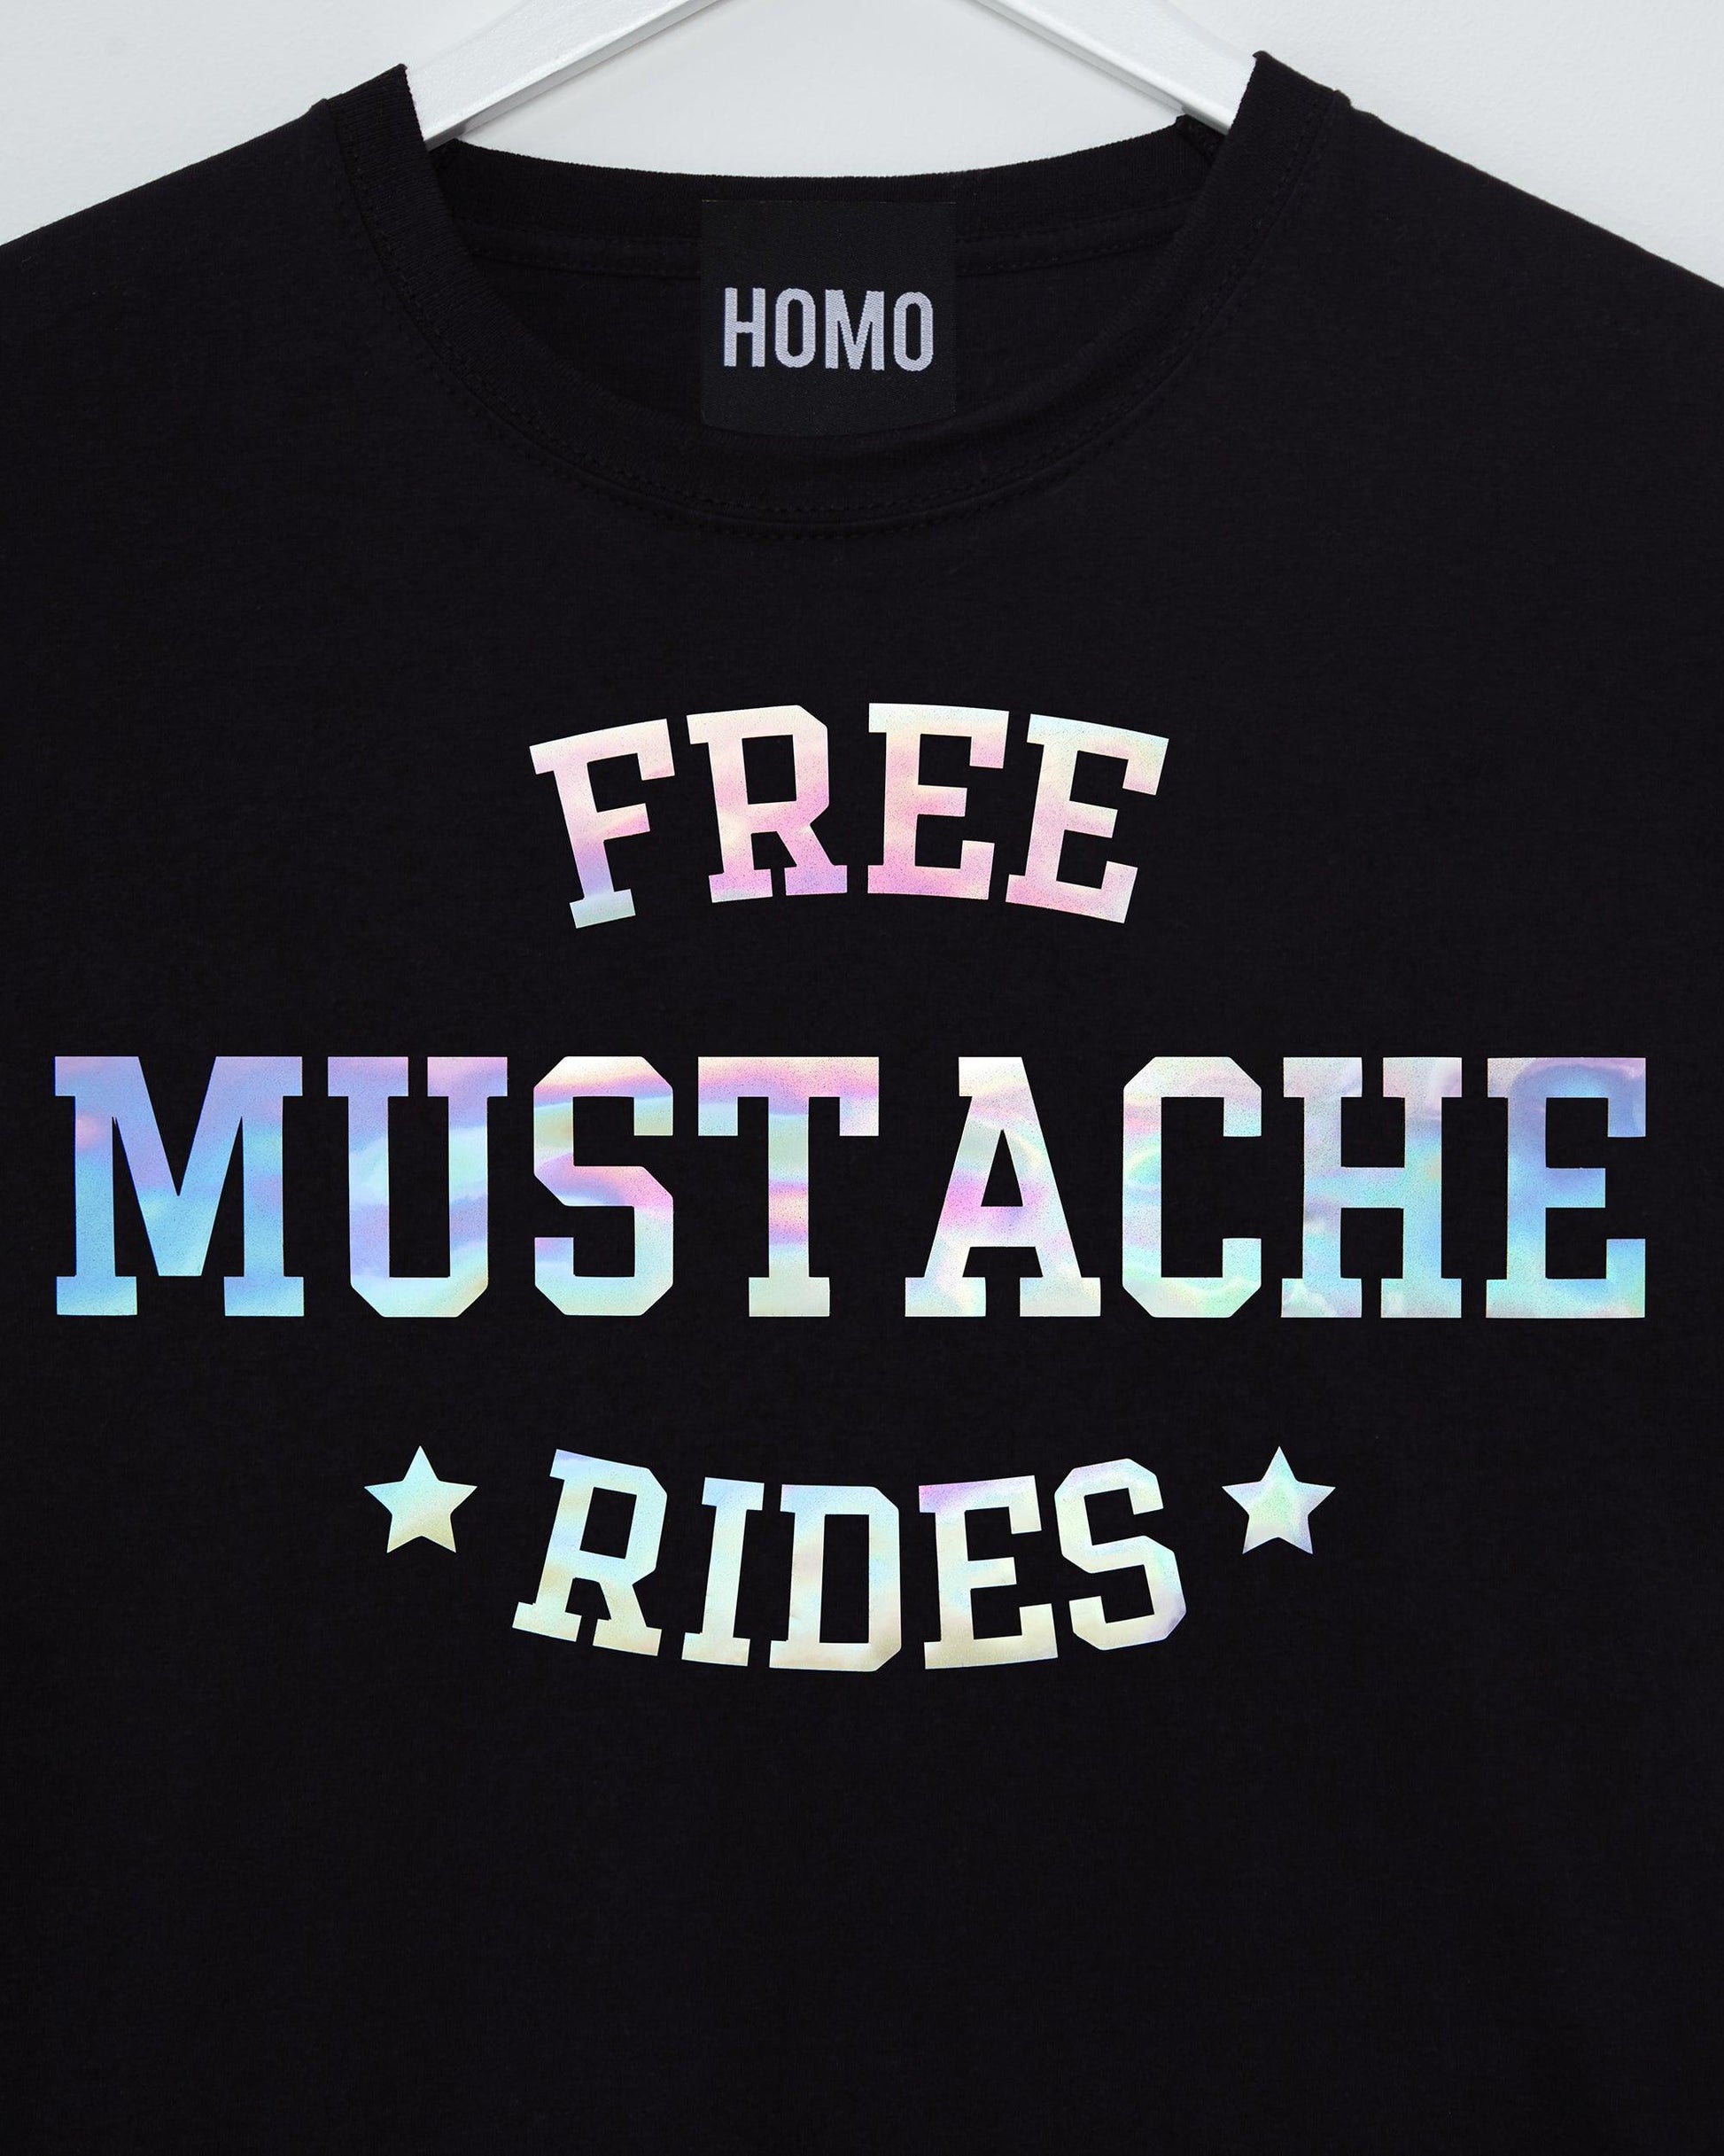 Free mustache rides, hologram - men's cropped tshirt / crop top - HOMOLONDON